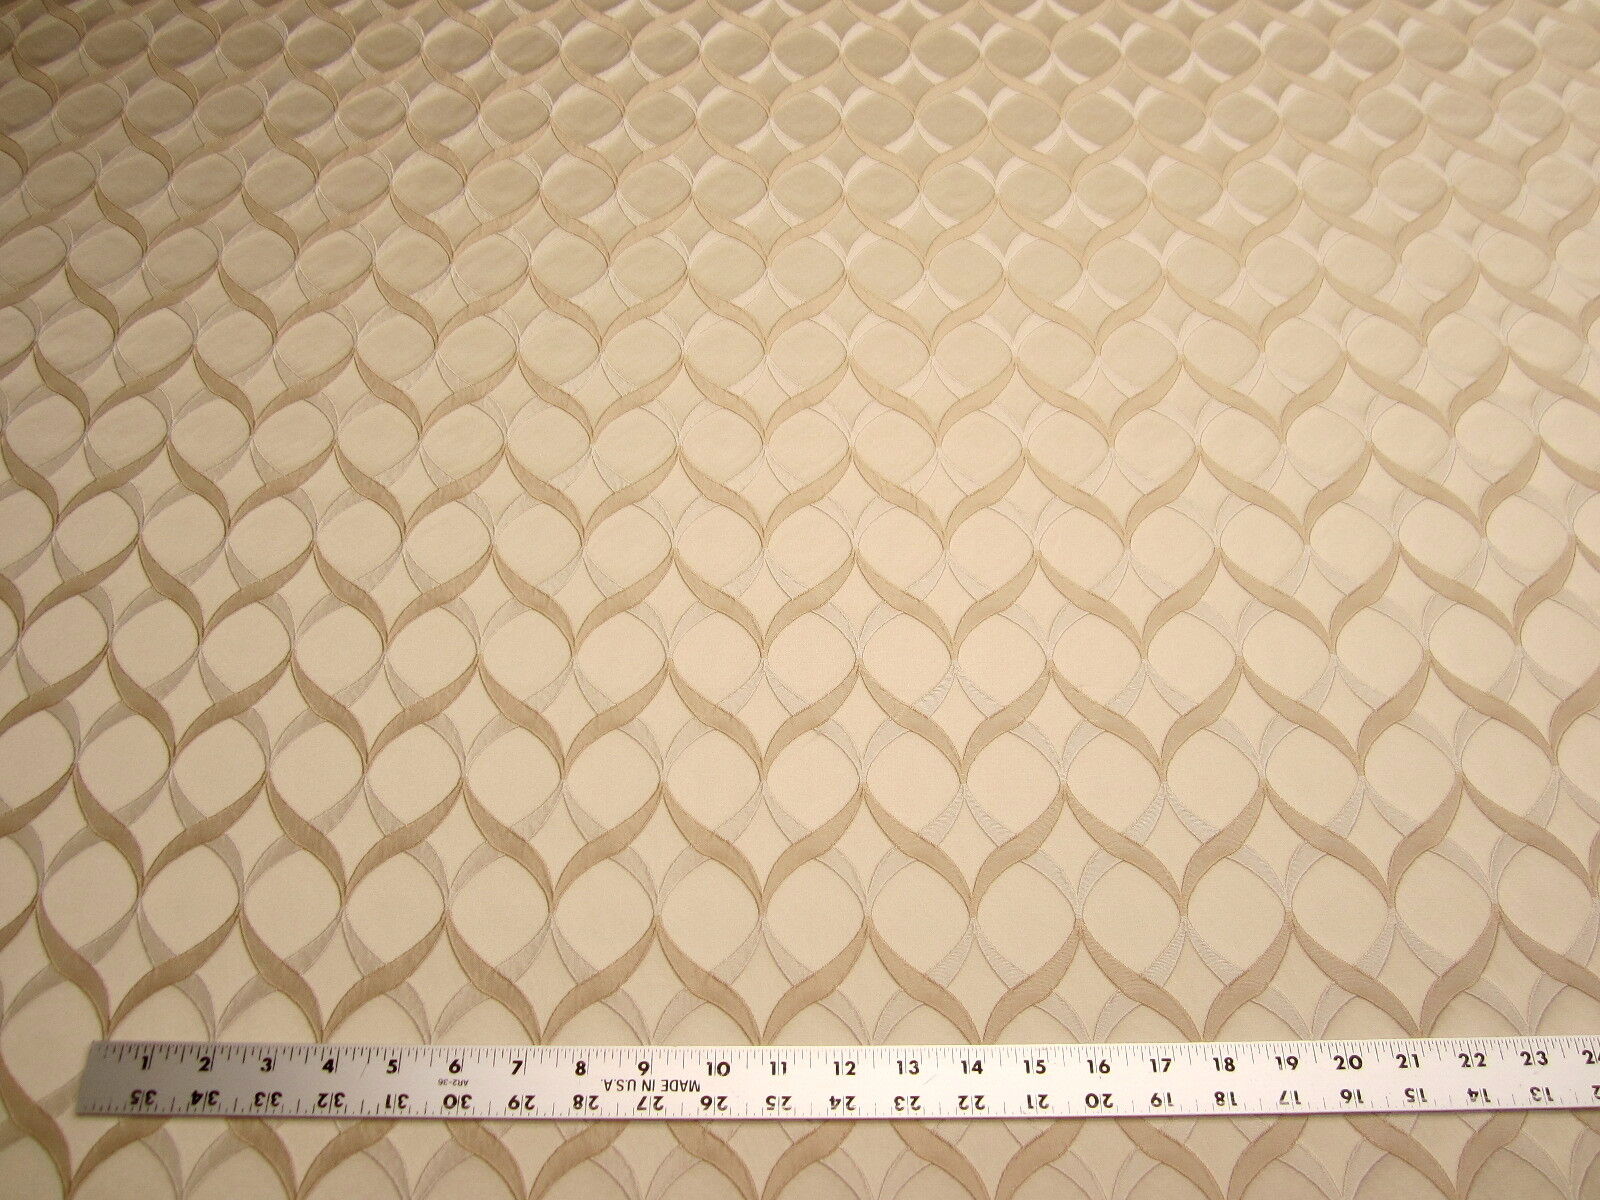 5 5/8 yards of Fabricut Lufka Lattice Drapery fabric r2654